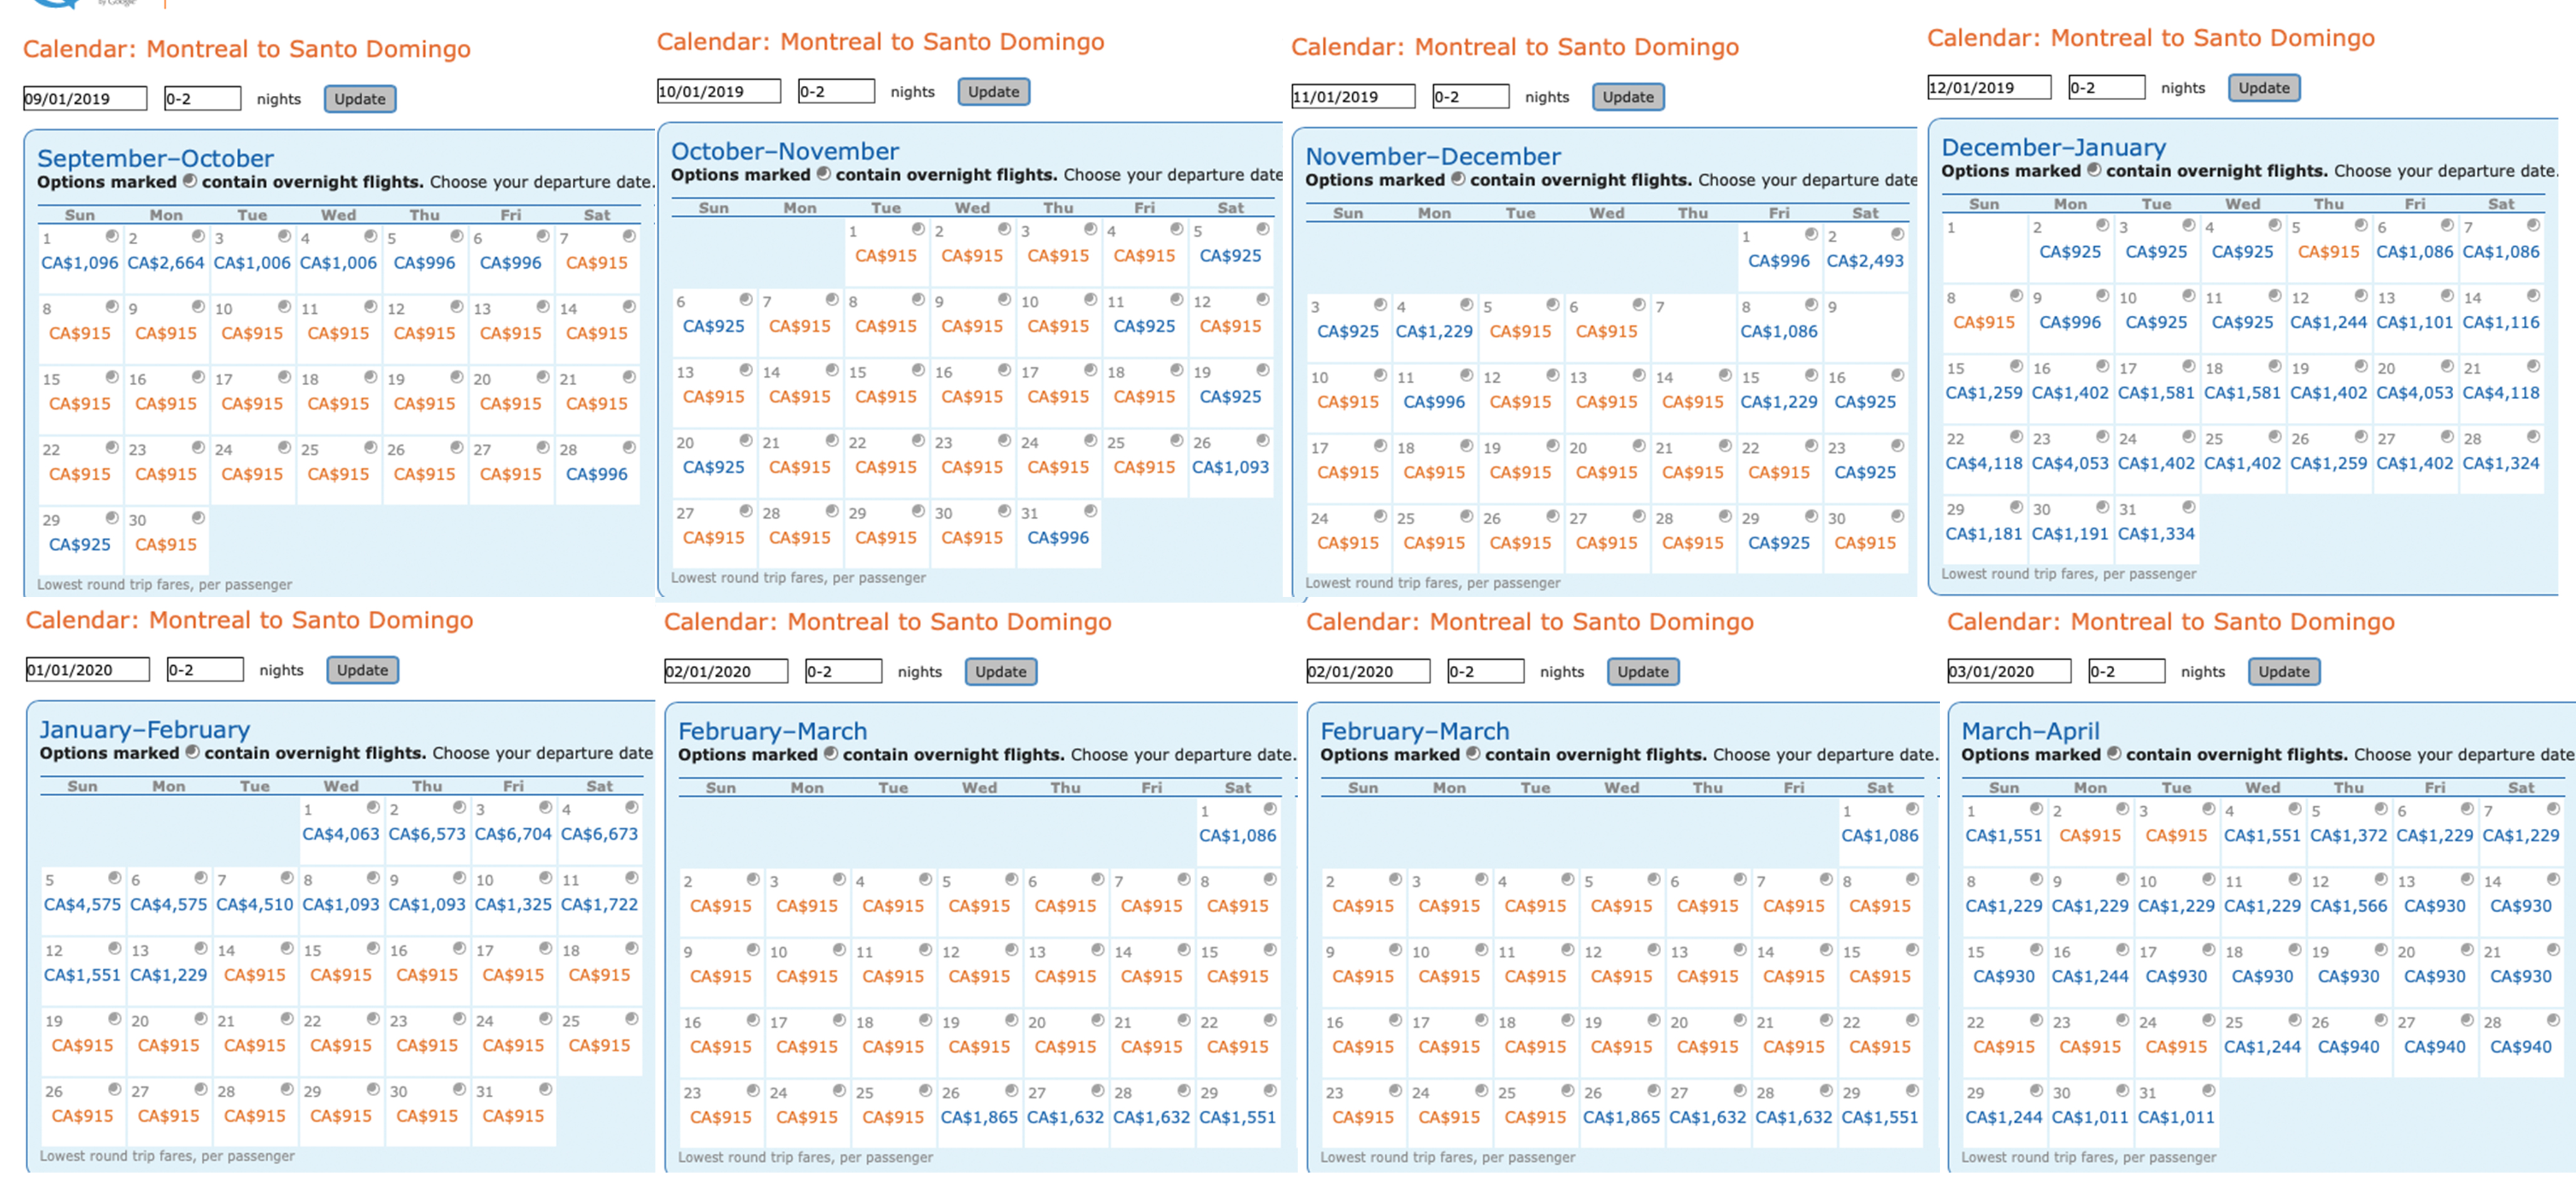 Calendar of Delta MQD run itineraries on Aeromexico from Montreal (YUL) to Santo Domingo (SDQ).